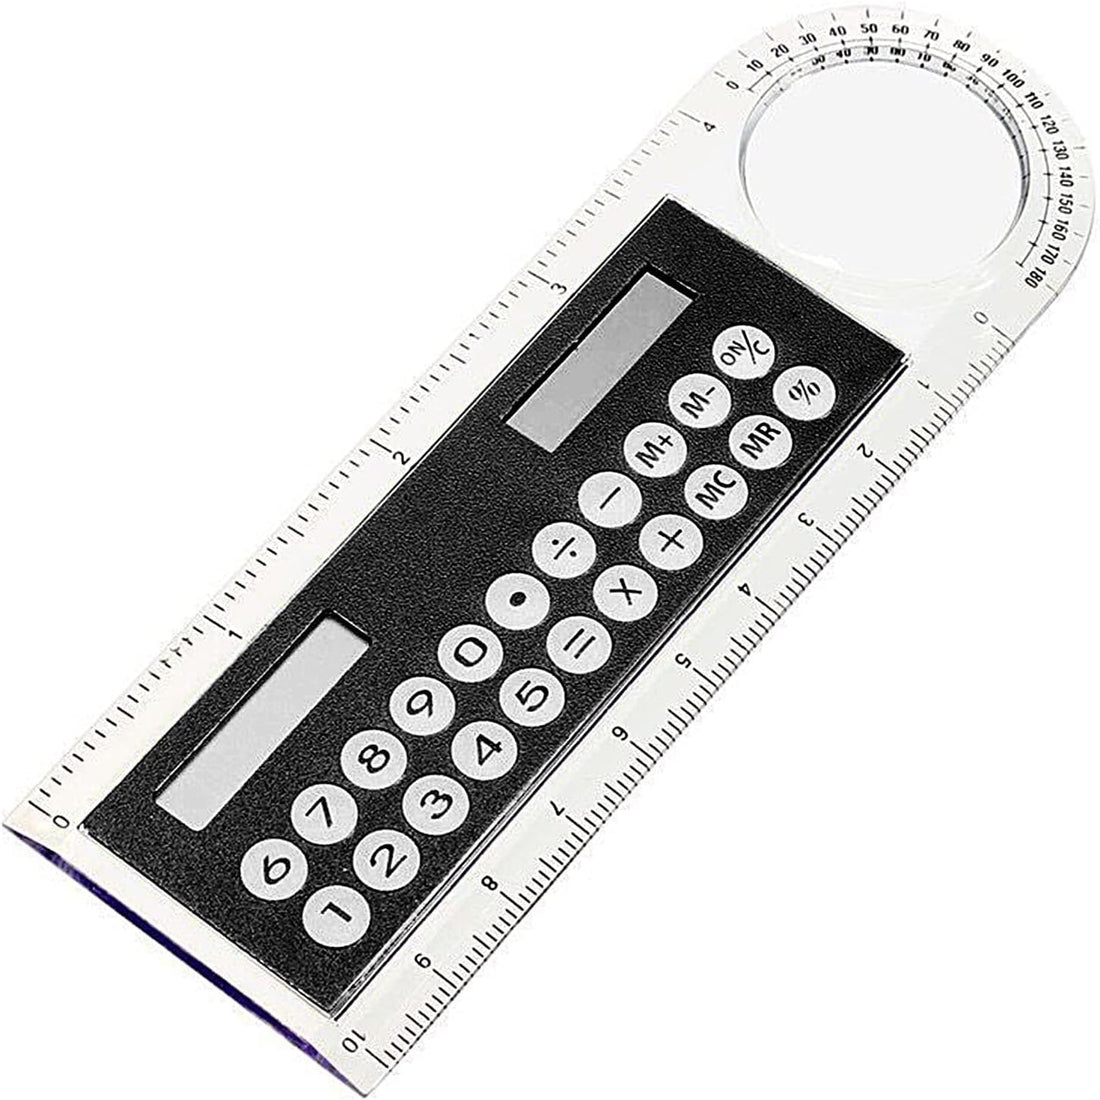 Black Mini Calculator, Portable Pocket Calculator Handheld Basic Calculator 3 in 1 Solar Powered Calculator Ruler Magnifier for Students Kids School Home Office,Christmas Birthday Gift Basic